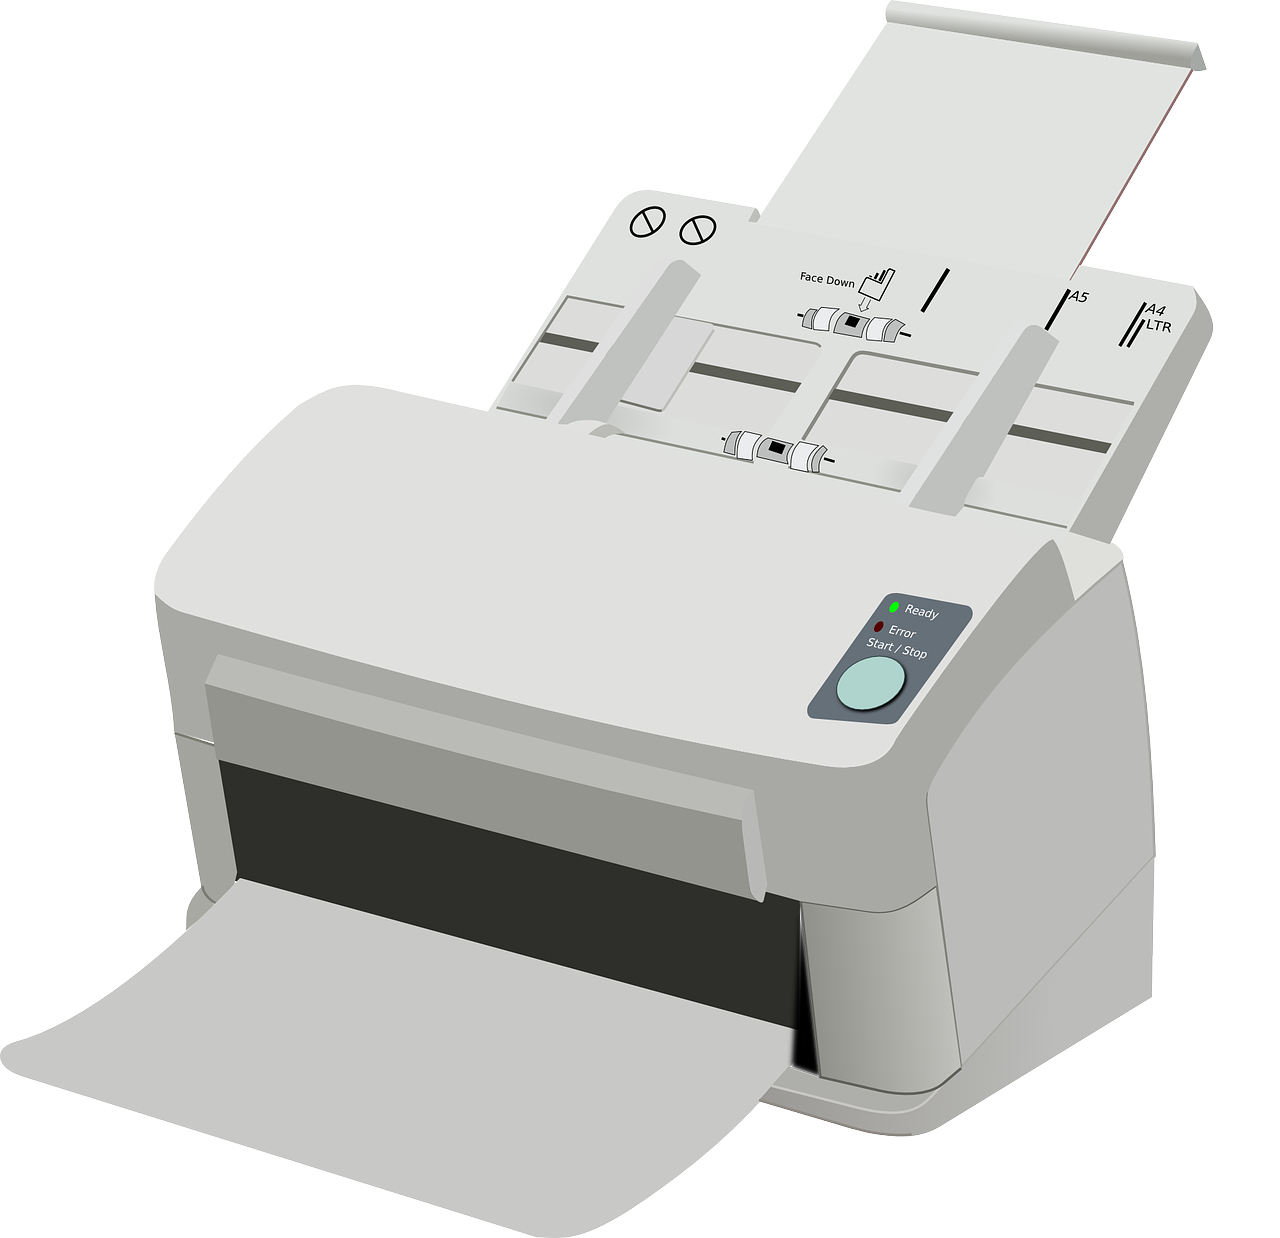 laser printer, printer, electrophotographic printer